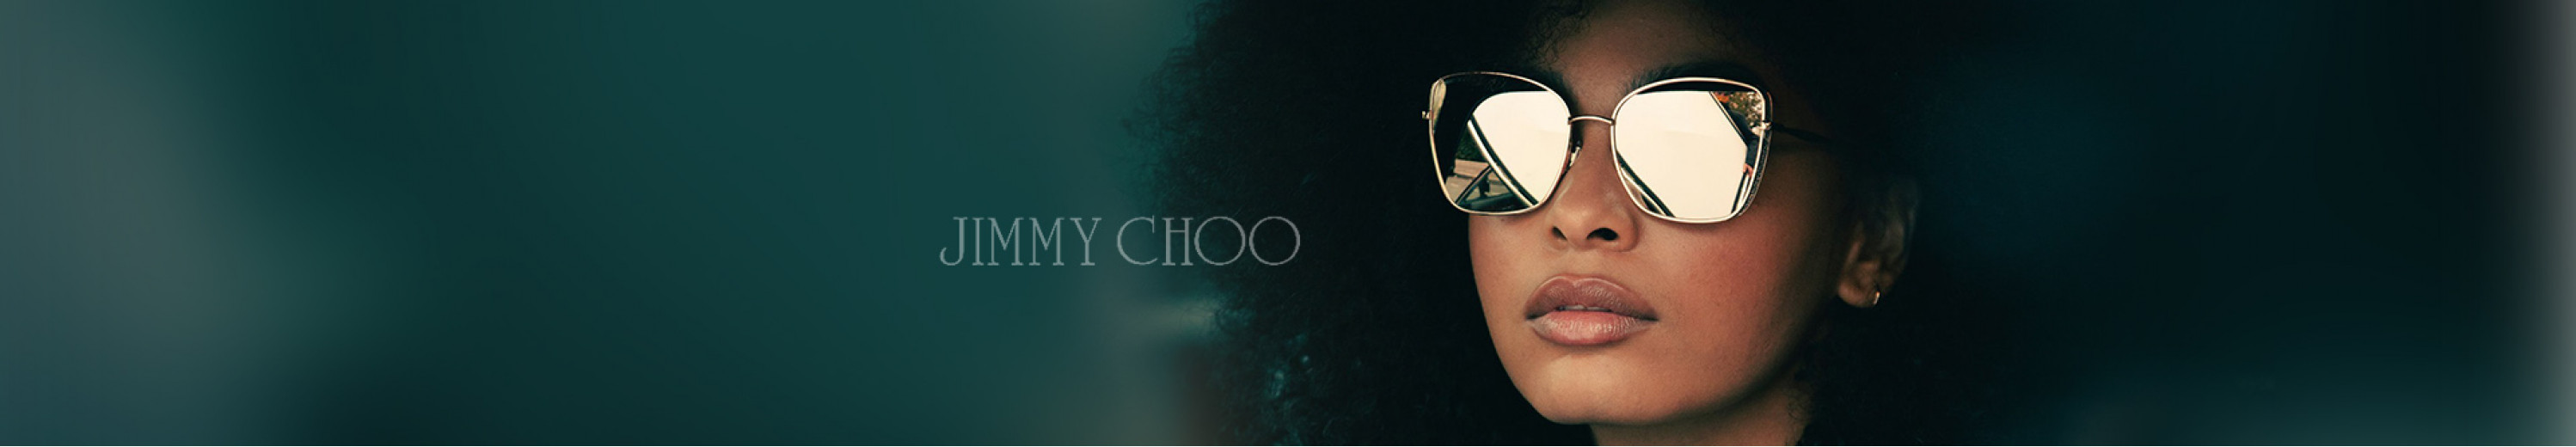 Jimmy Choo Getaway Inspiration Eyewear Collection